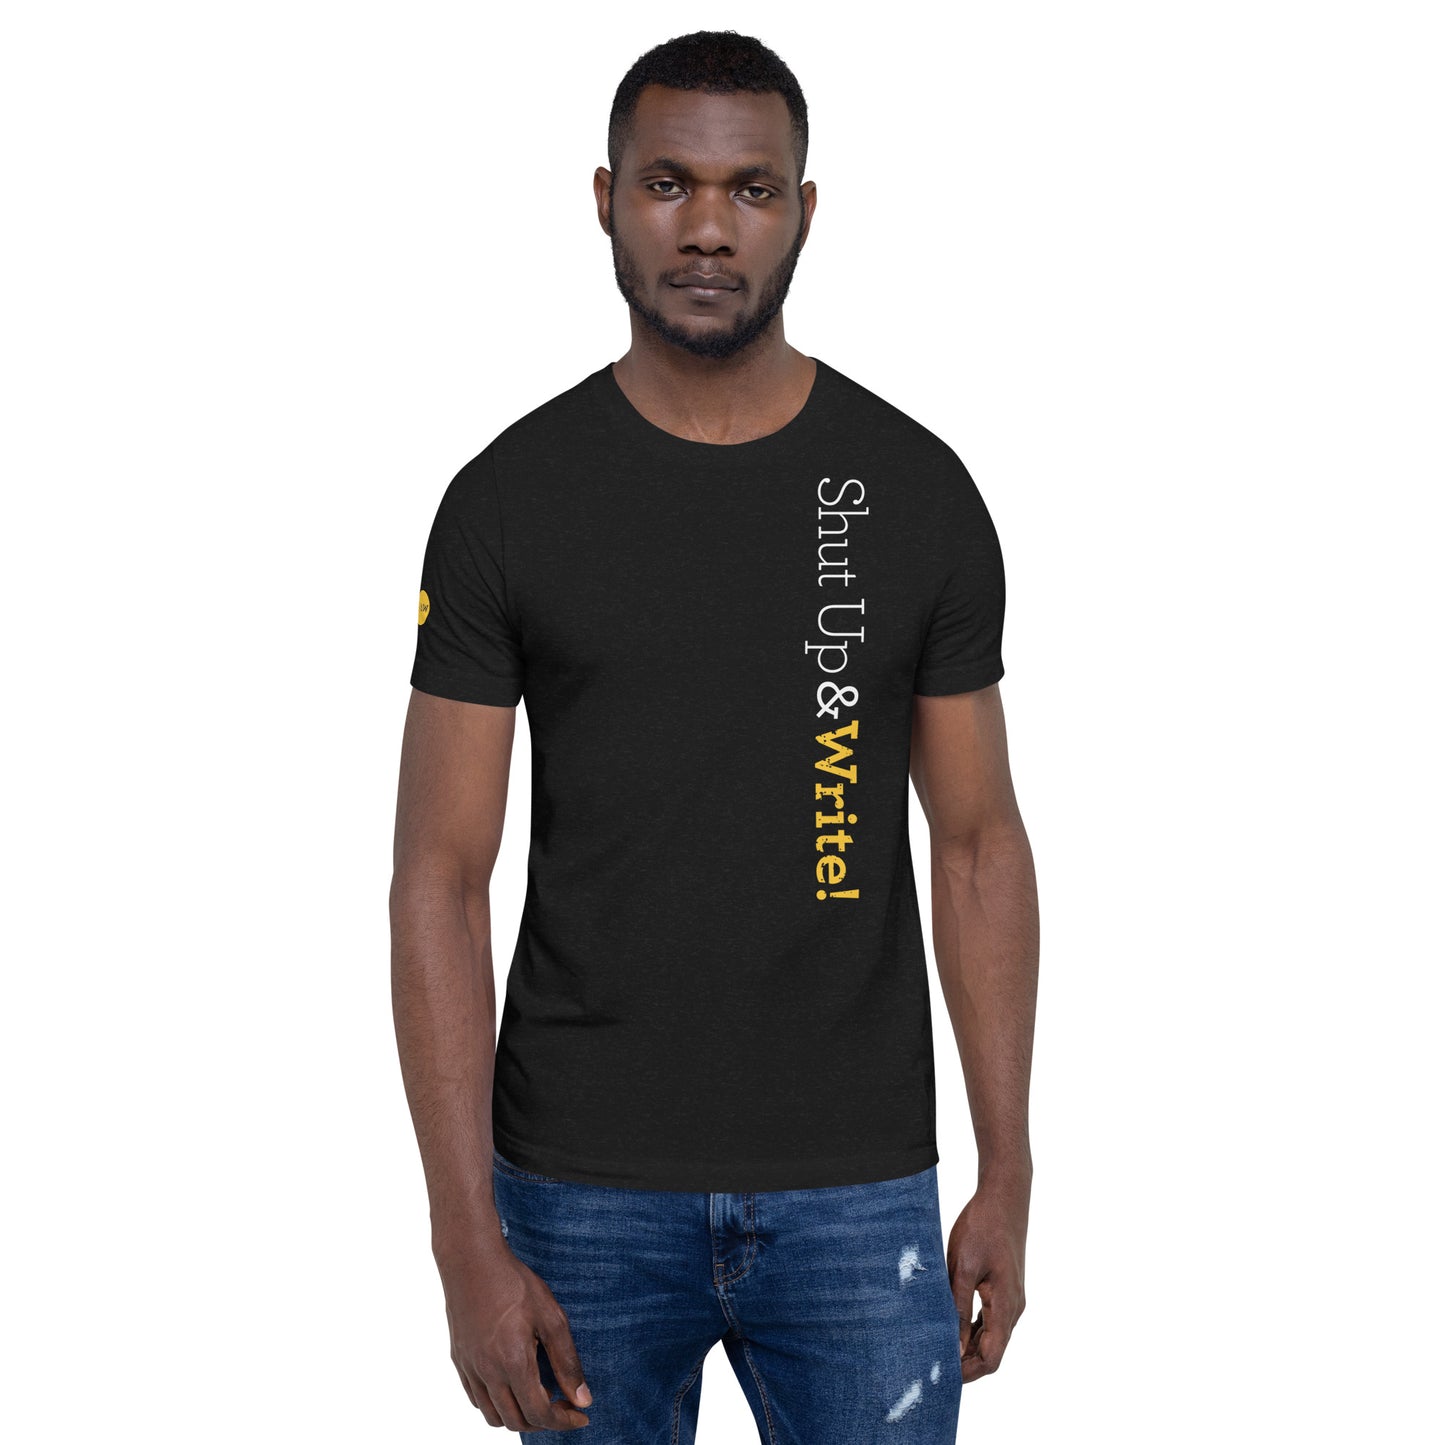 Black Men's T-shirt